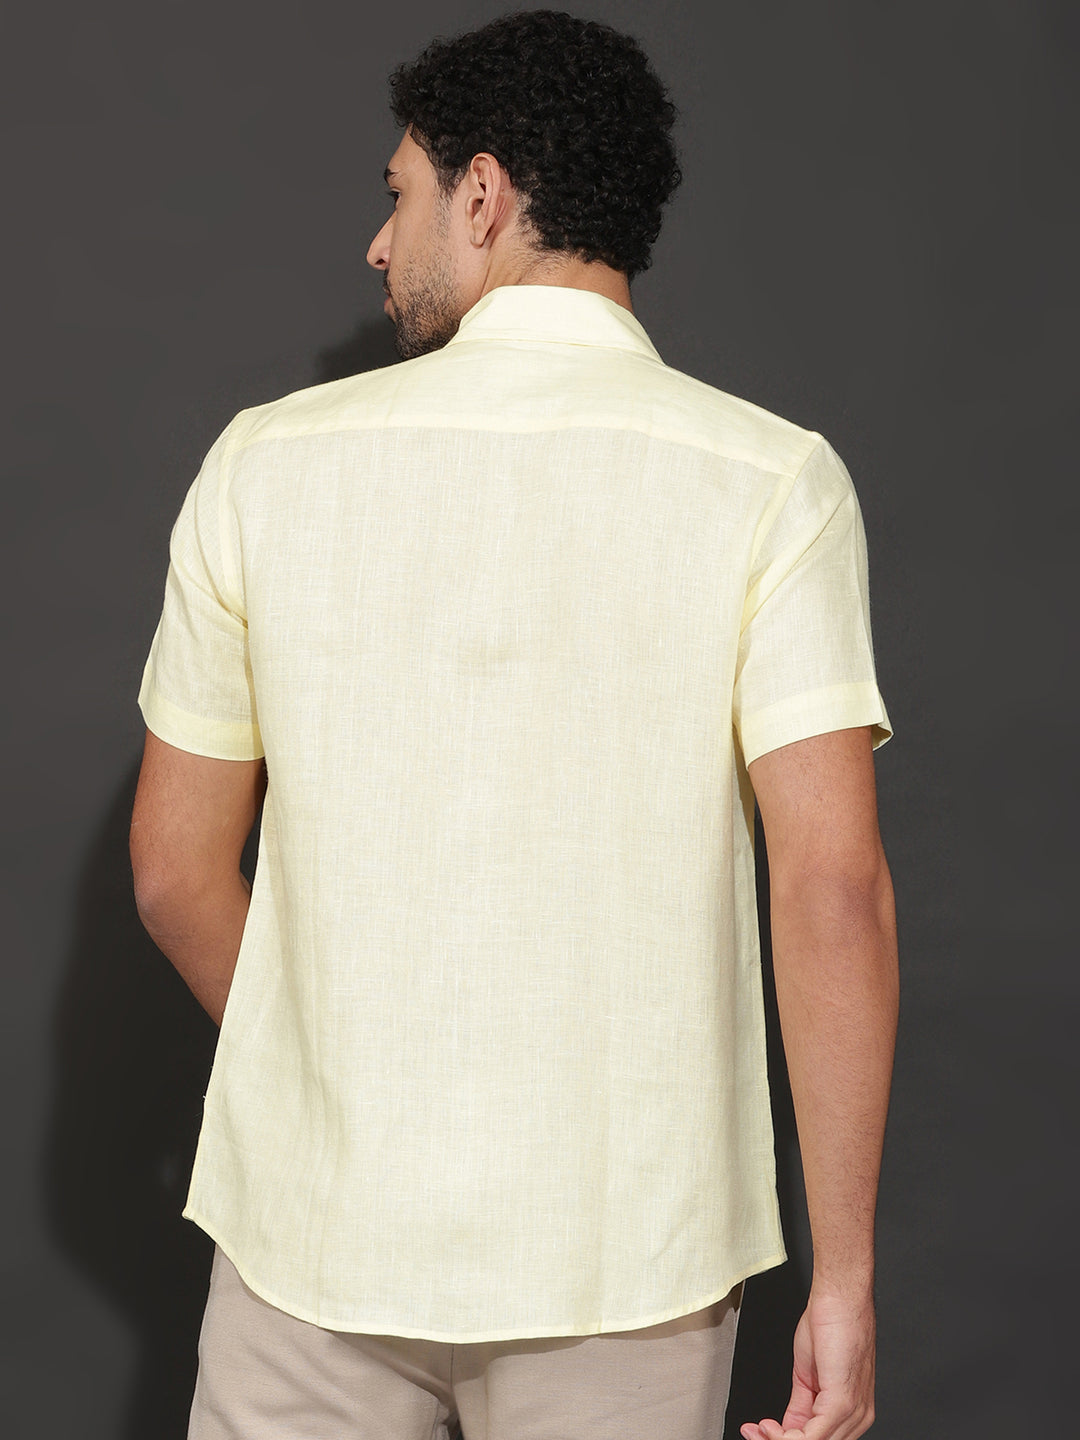 Harvey - Pure Linen Half Sleeve Shirt - Light Yellow